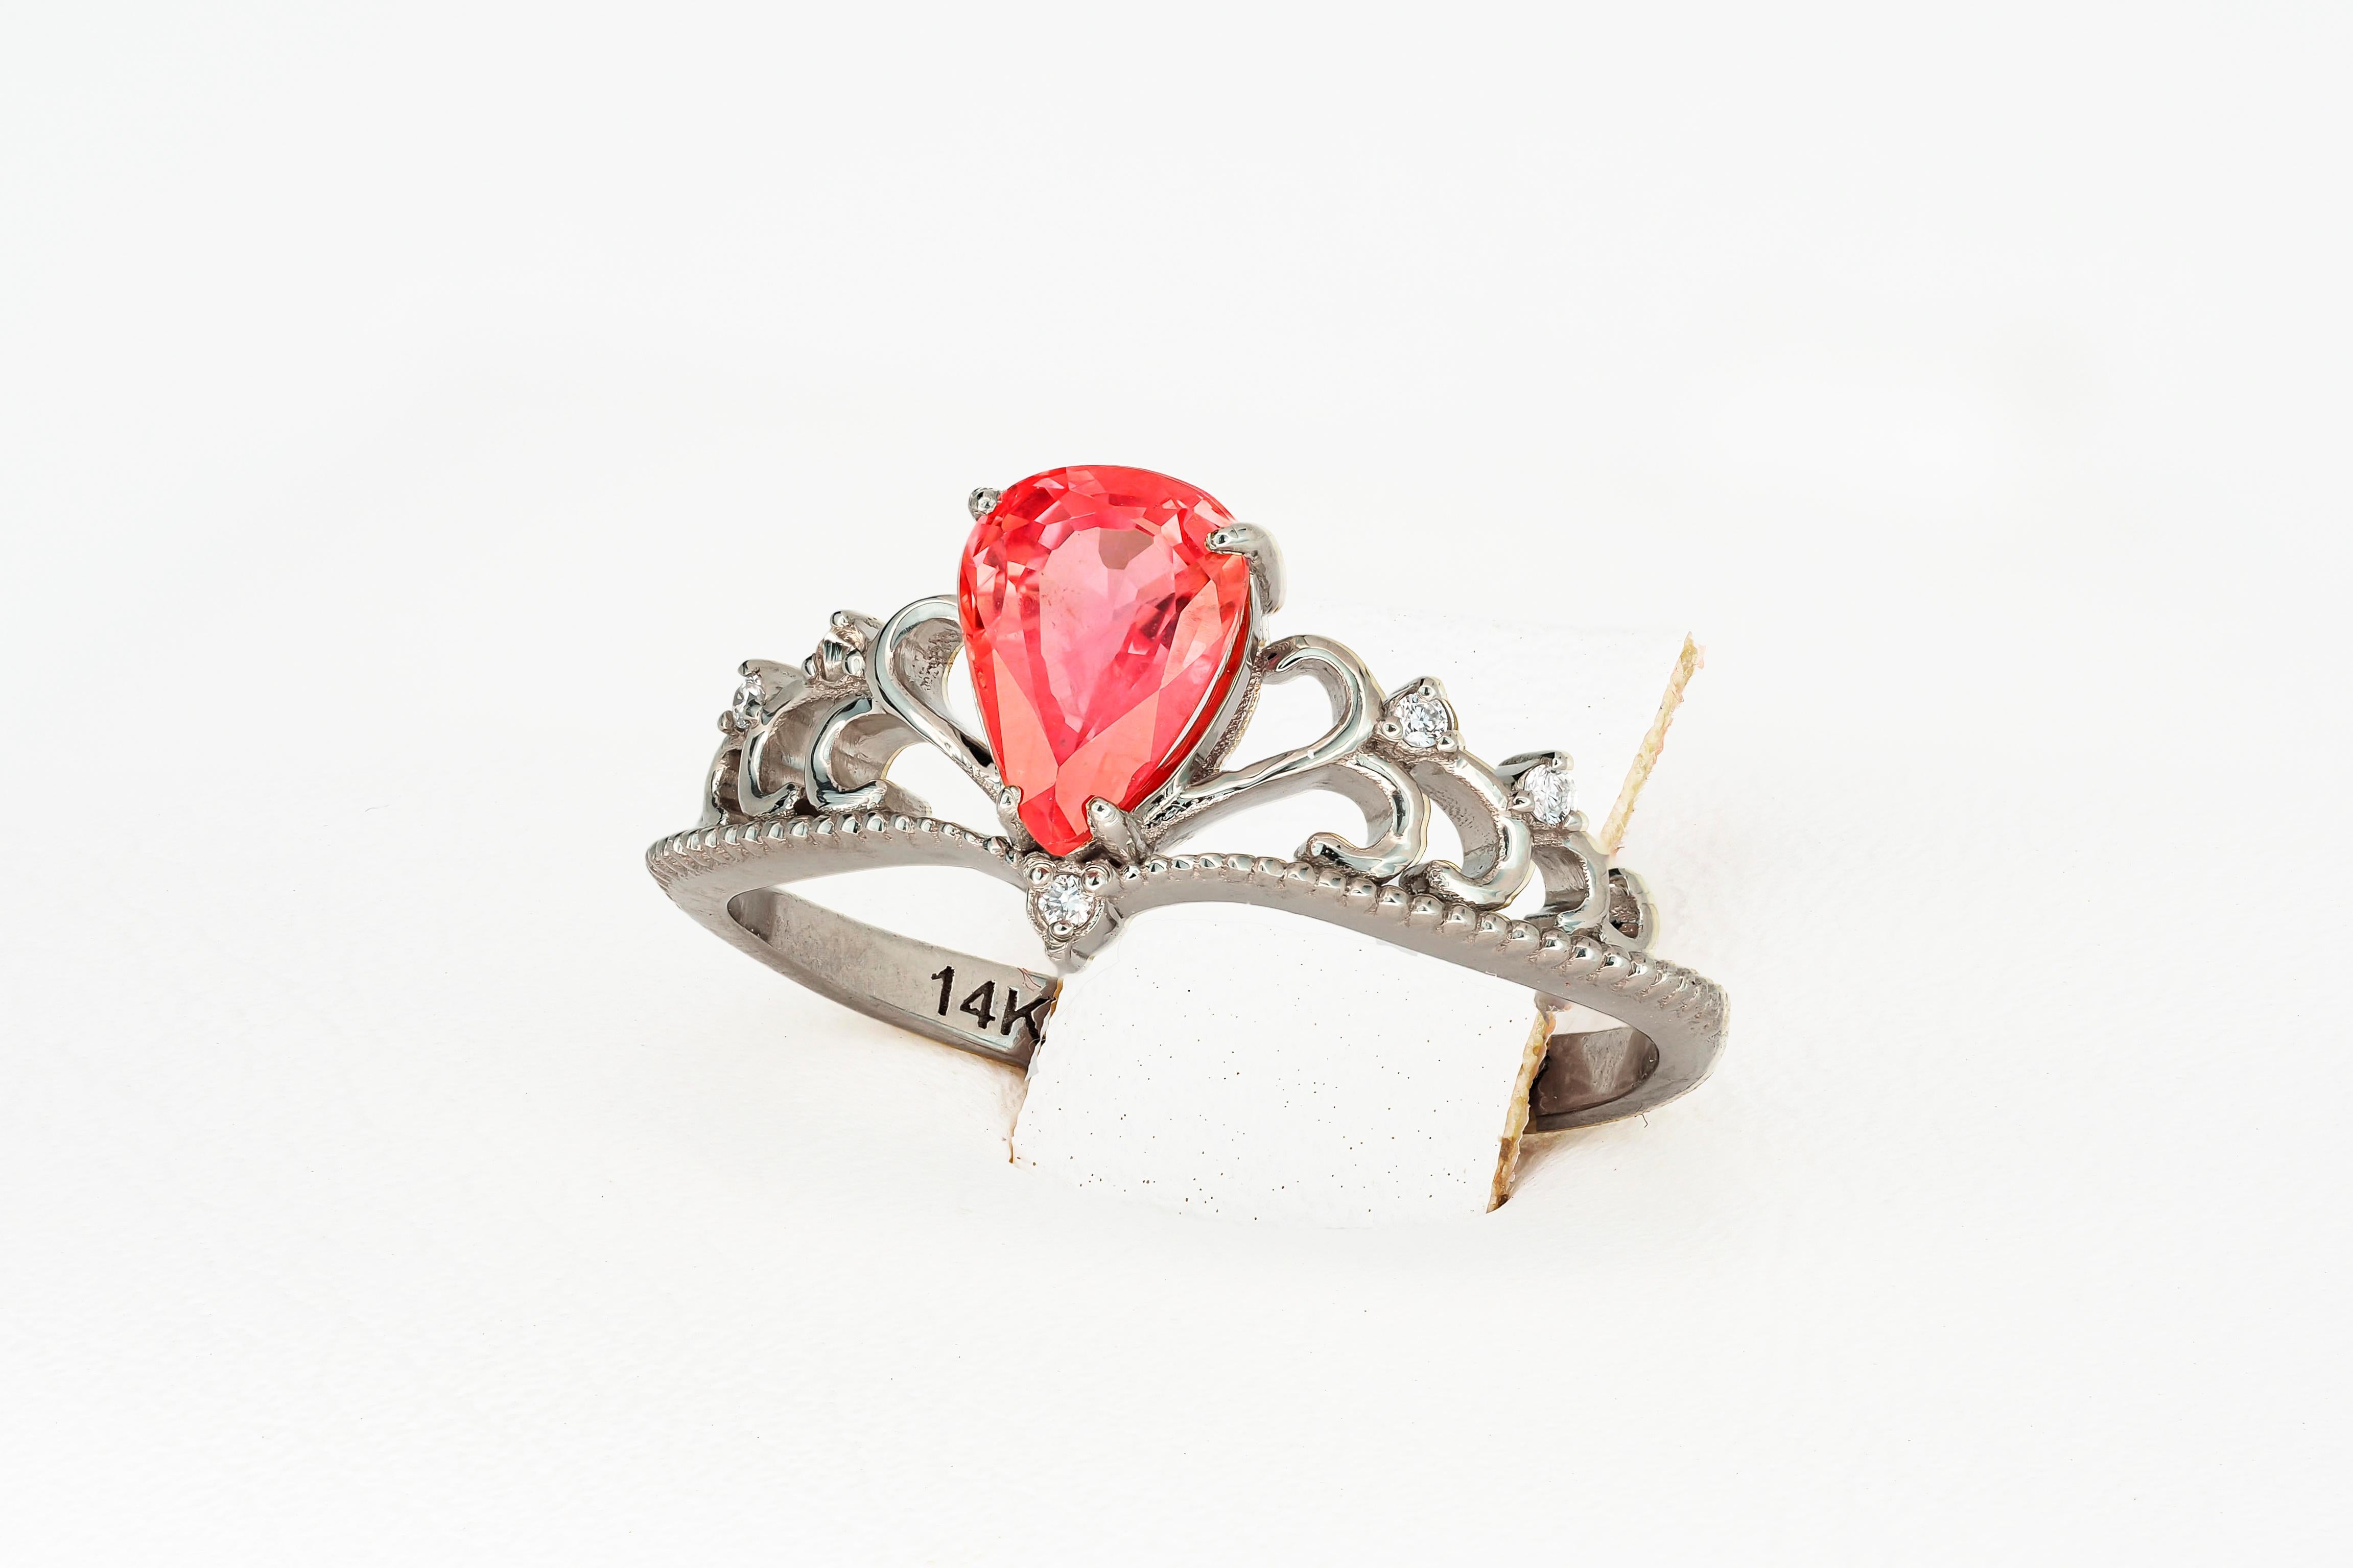 For Sale:  14 Karat Gold Tiara Ring with Pink Tourmaline and Diamonds. 2